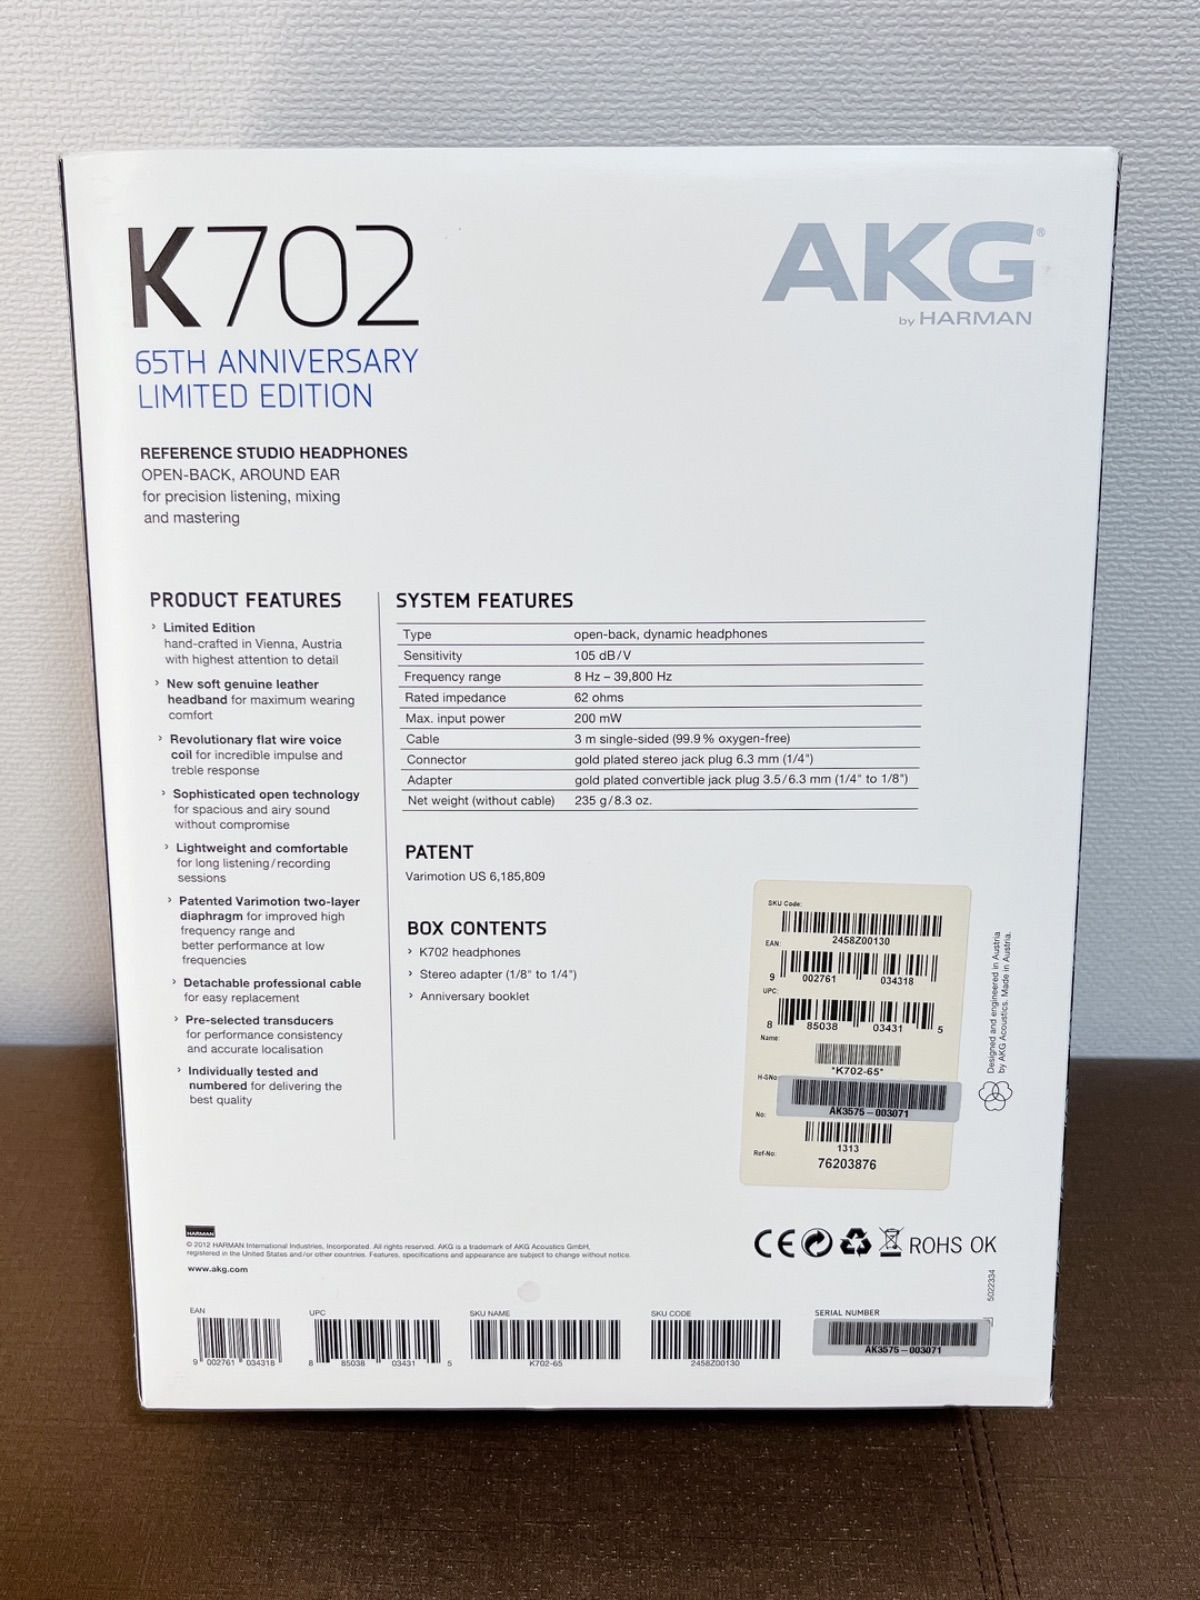 AKG K702 65th Anniversary edition